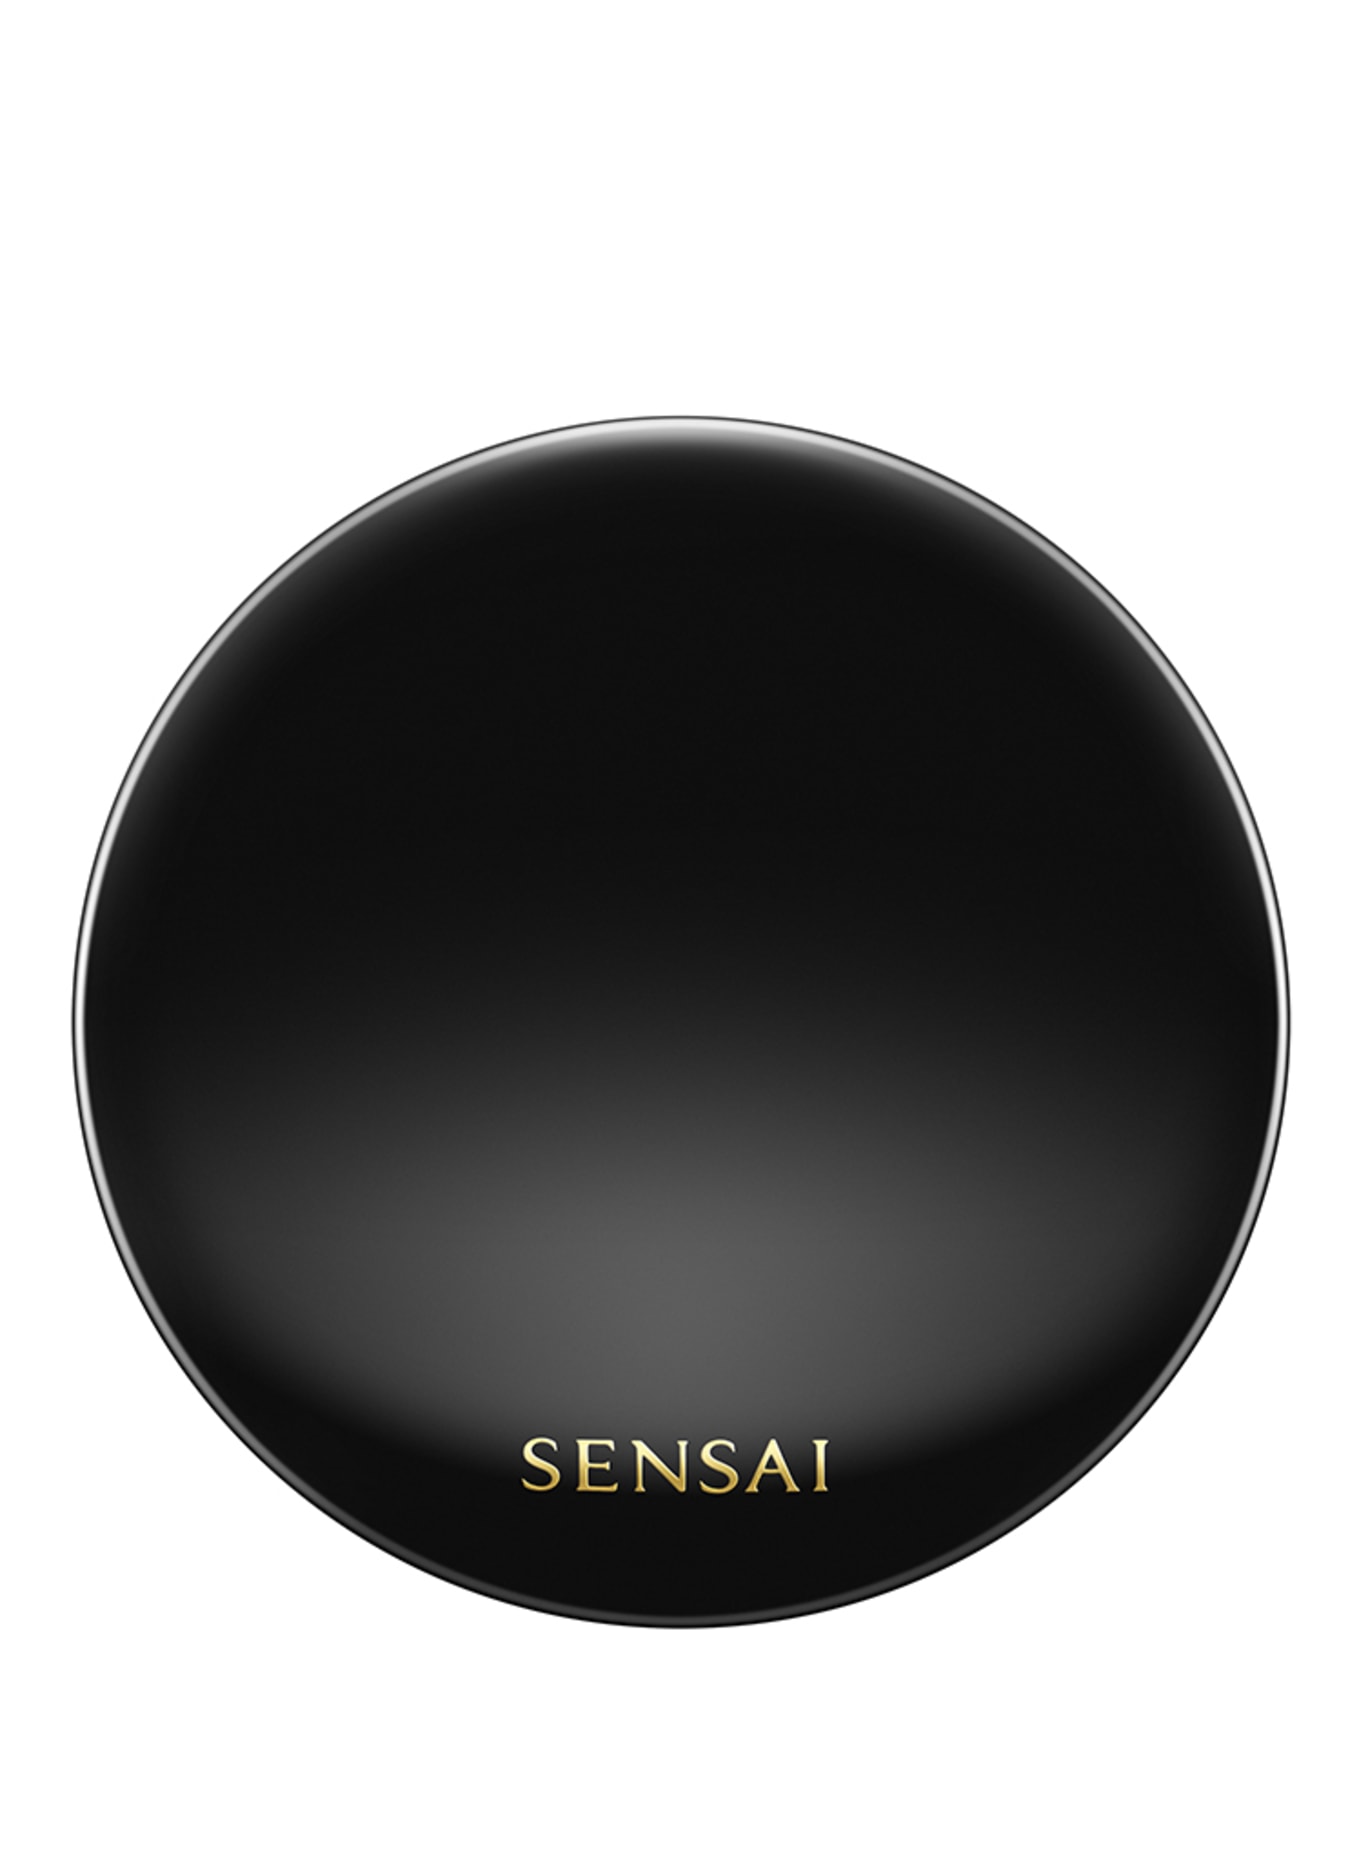 SENSAI TOTAL FINISH POWDER FOUNDATION CASE (Obrázek 3)